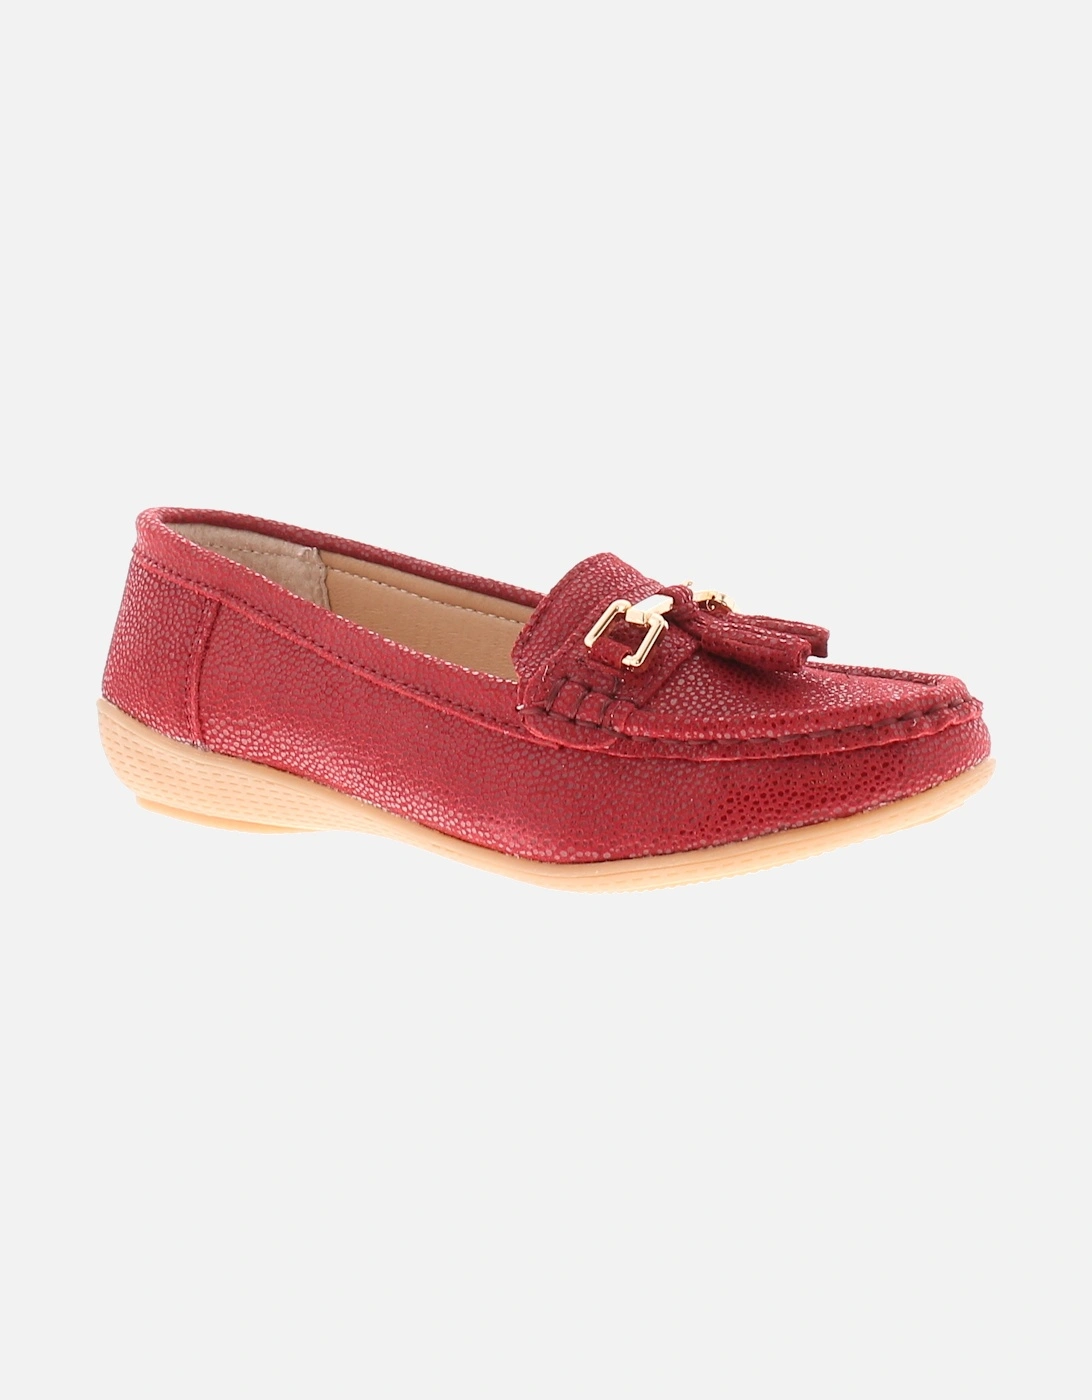 Womens Shoes Flat Tahiti Leather Slip On red UK Size, 6 of 5